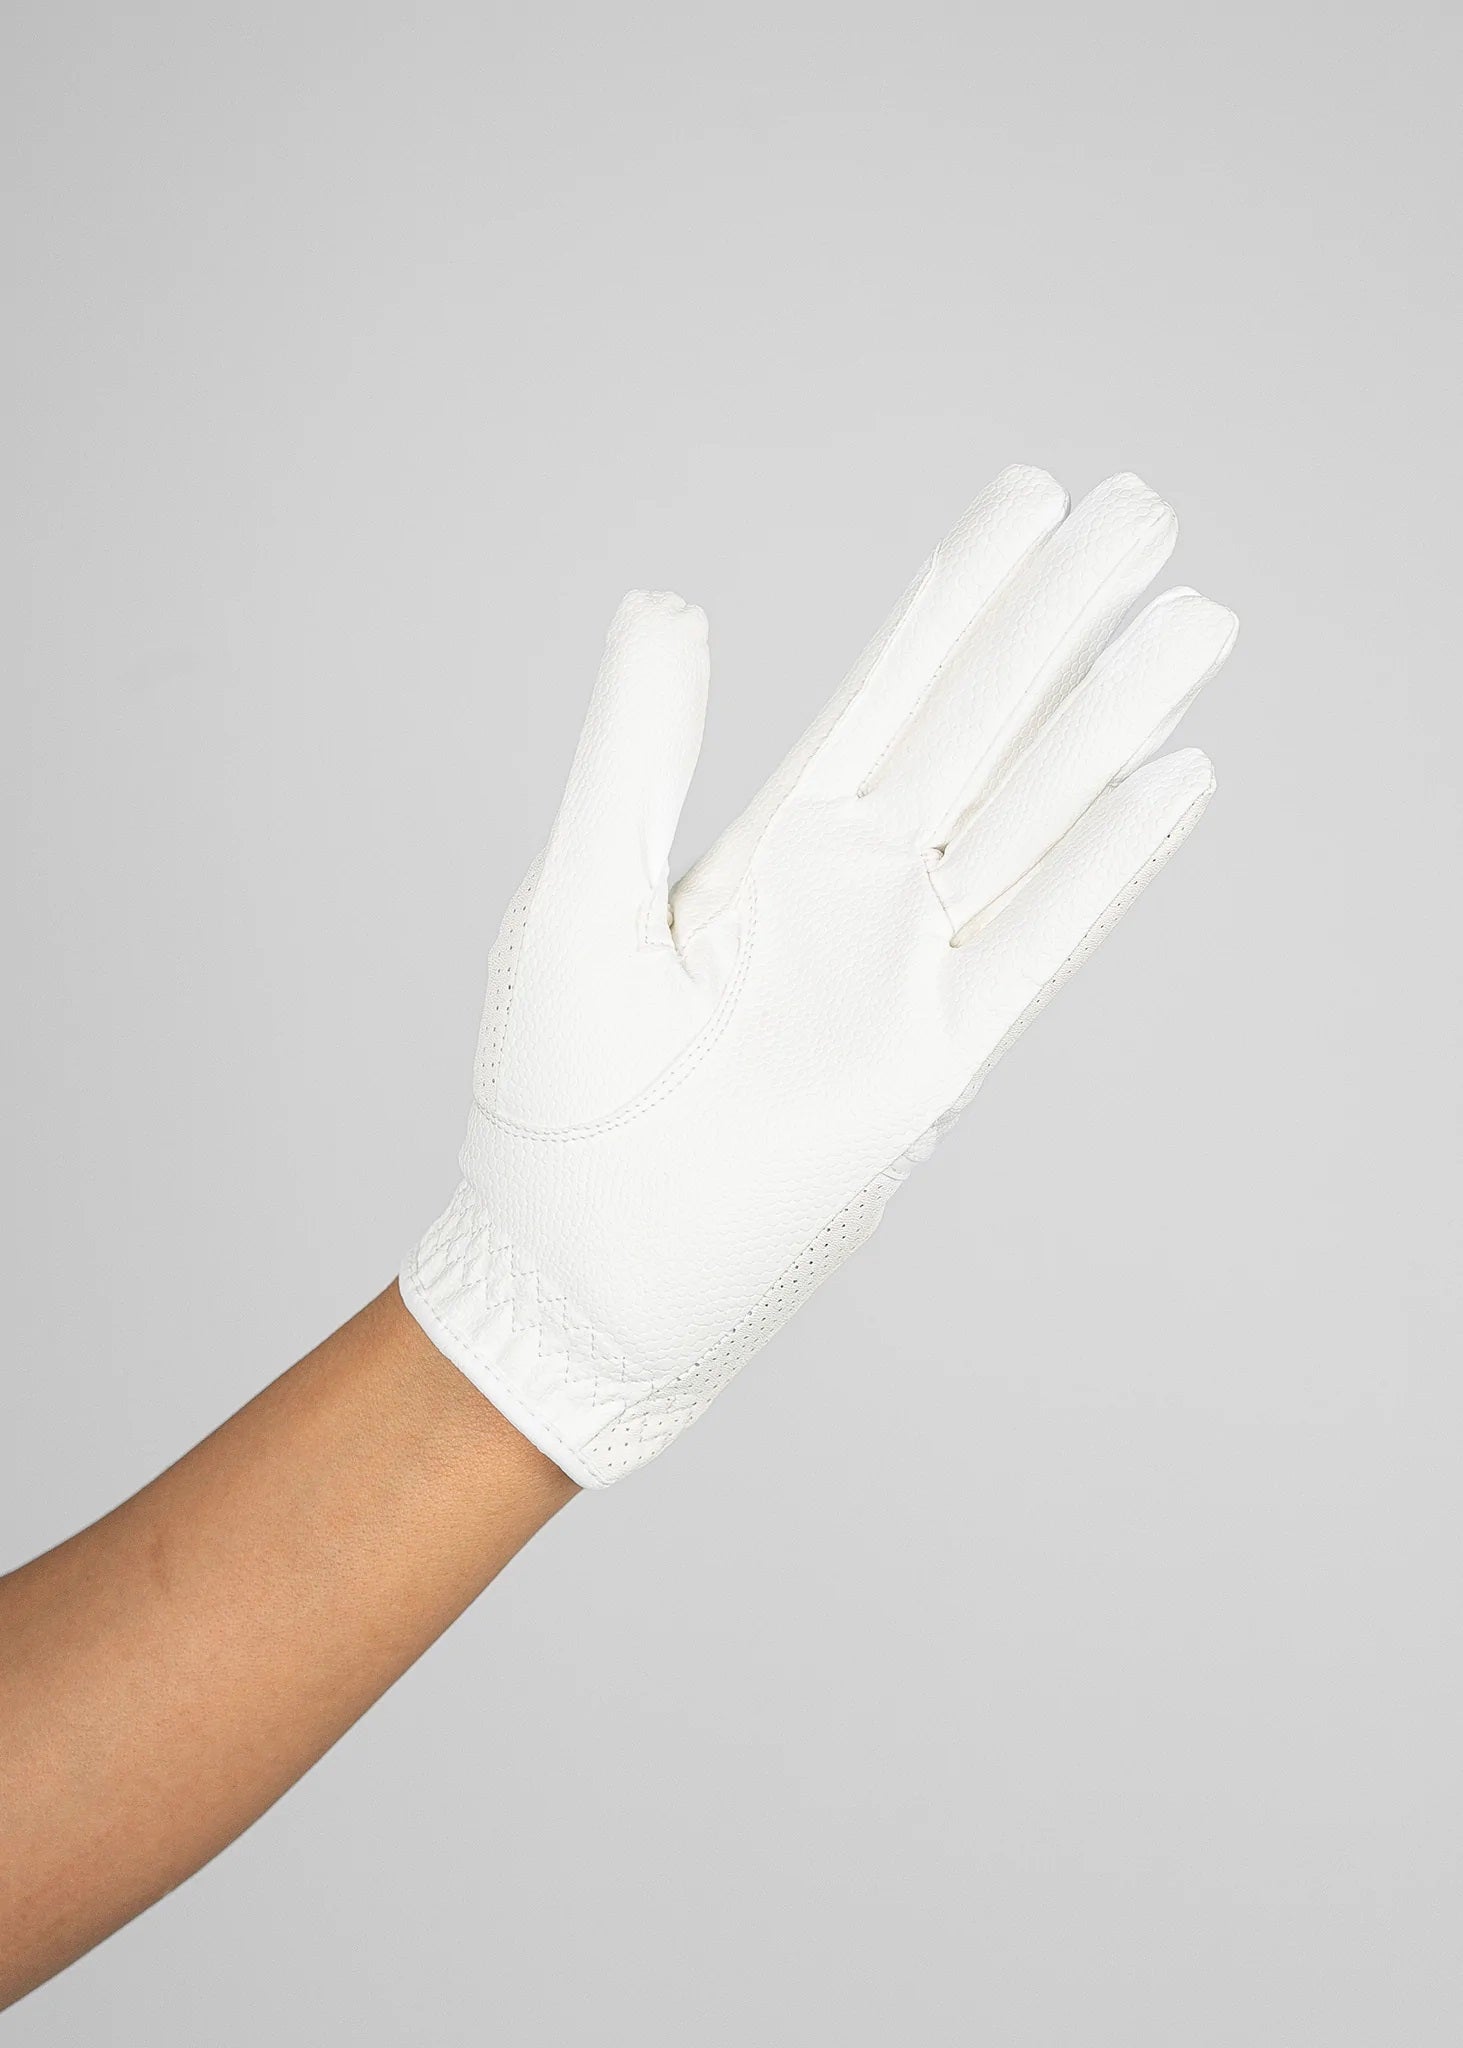 Max Riding Gloves - White